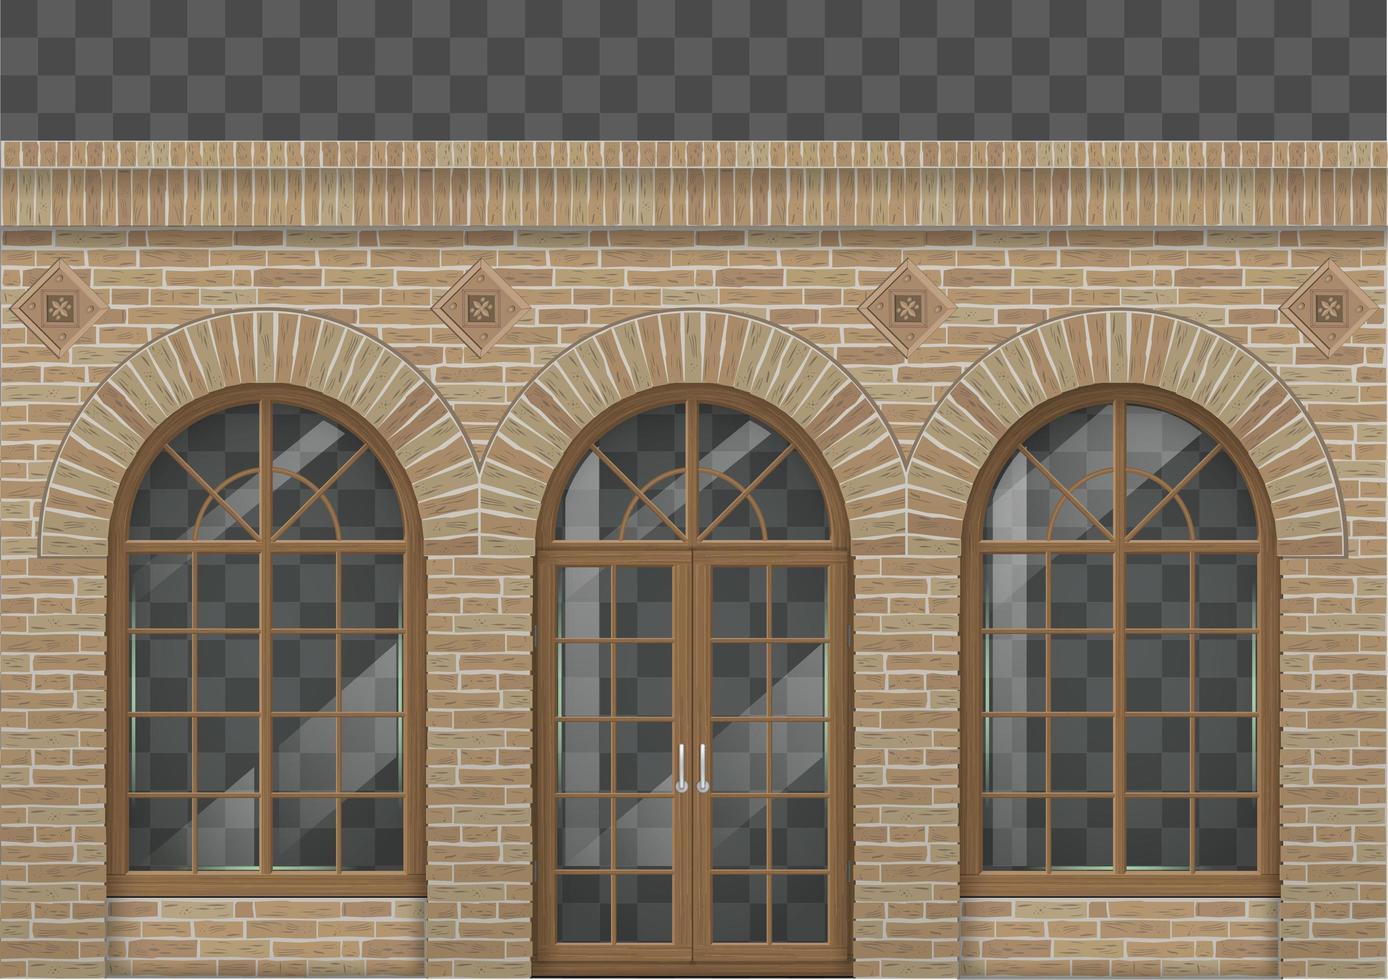 Retro brick style classic facade vector